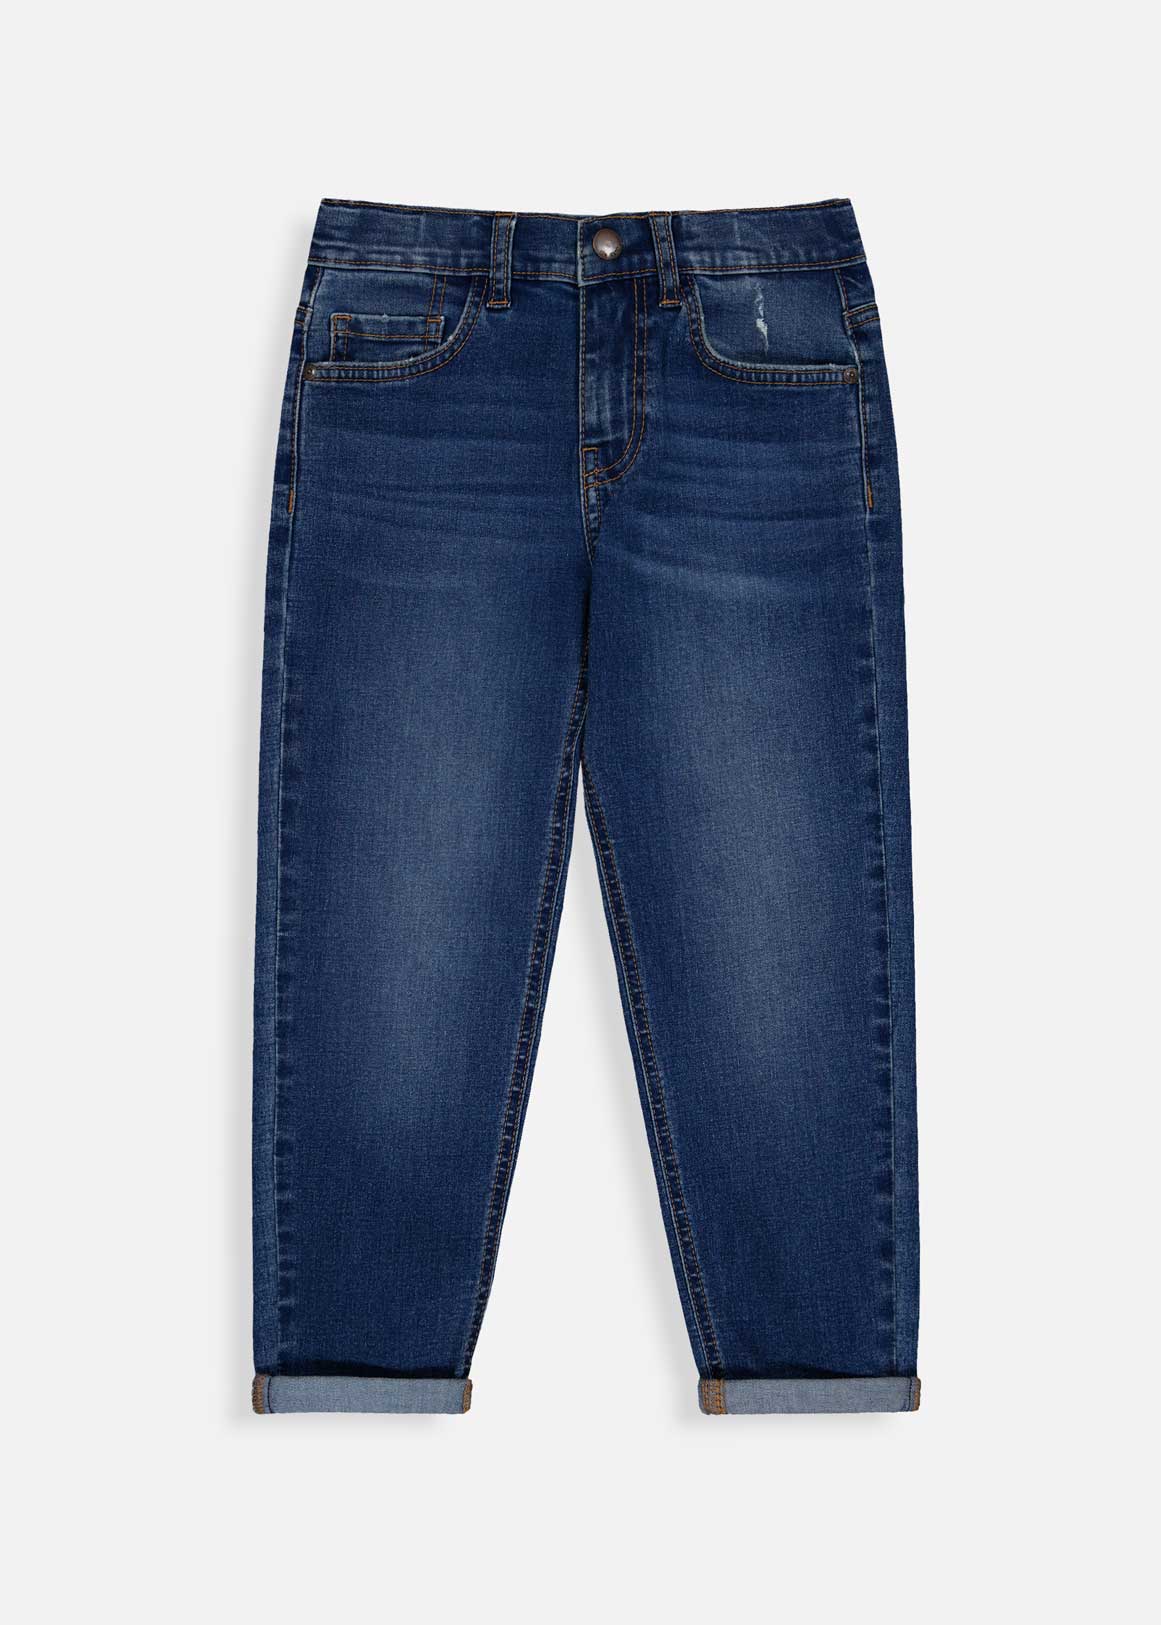 Adjustable Denim Jeans | Woolworths.co.za